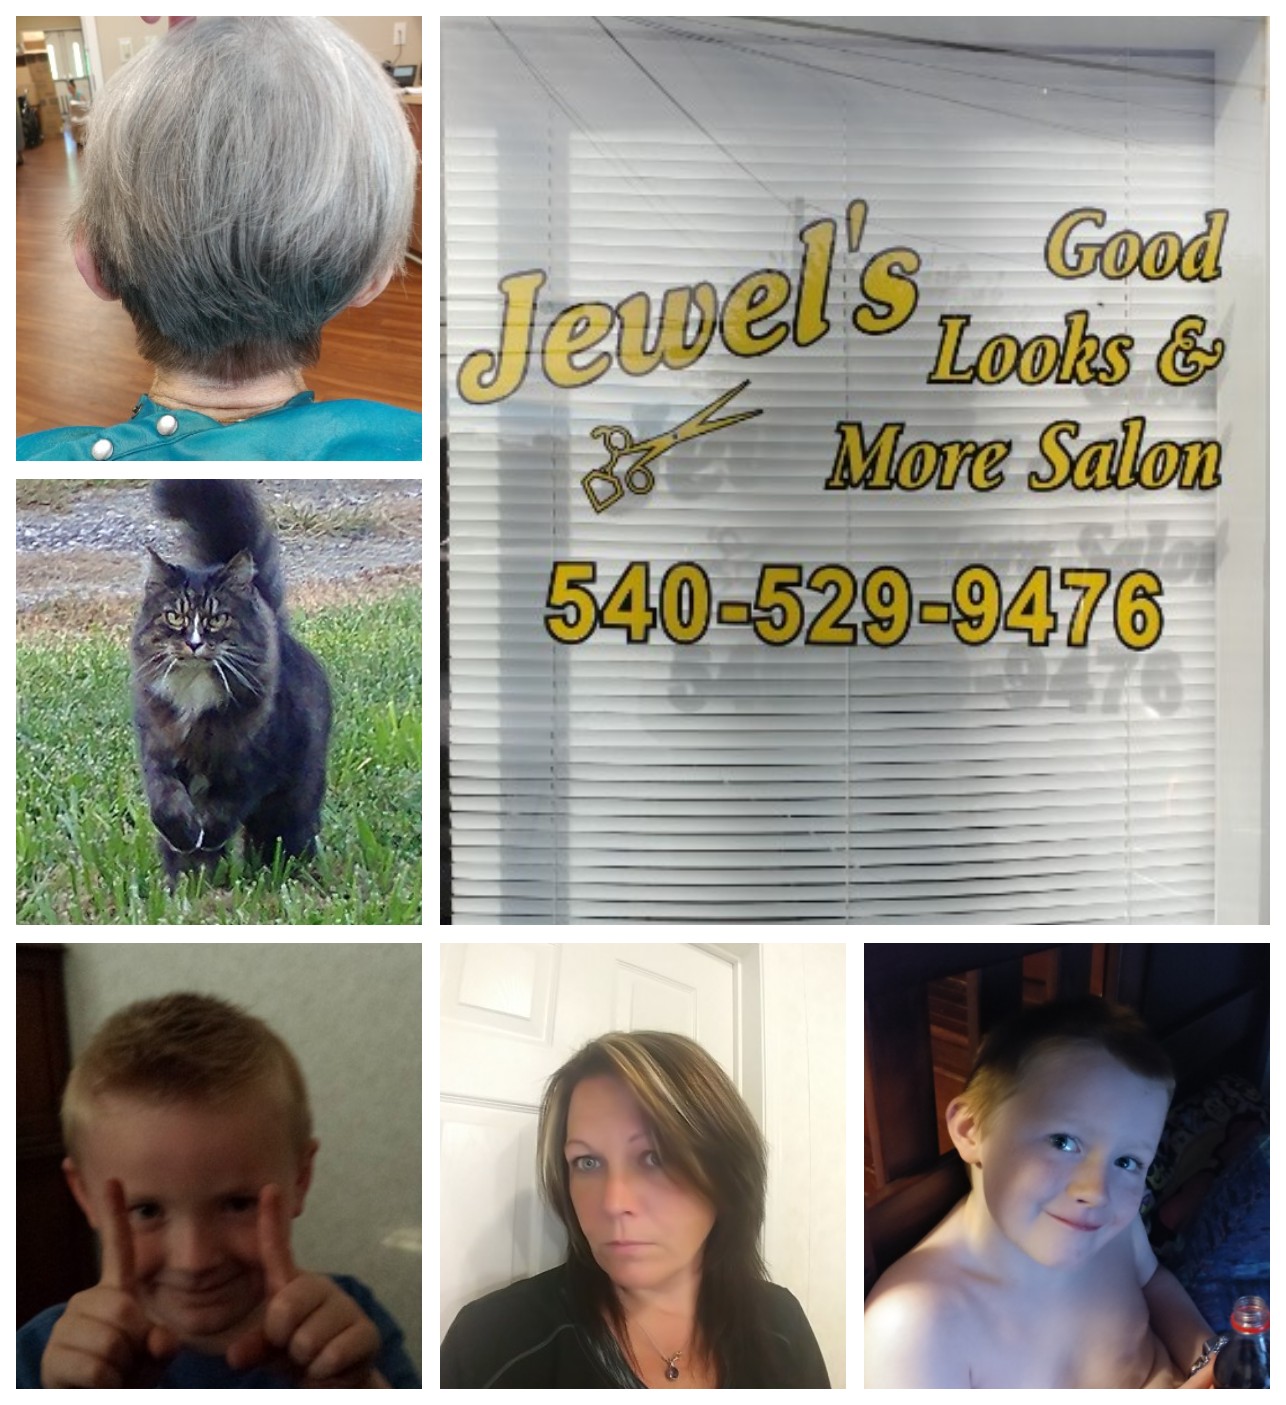 Jewels Good Looks & More Salon 8950 Pine Forest Rd NE, Copper Hill Virginia 24079